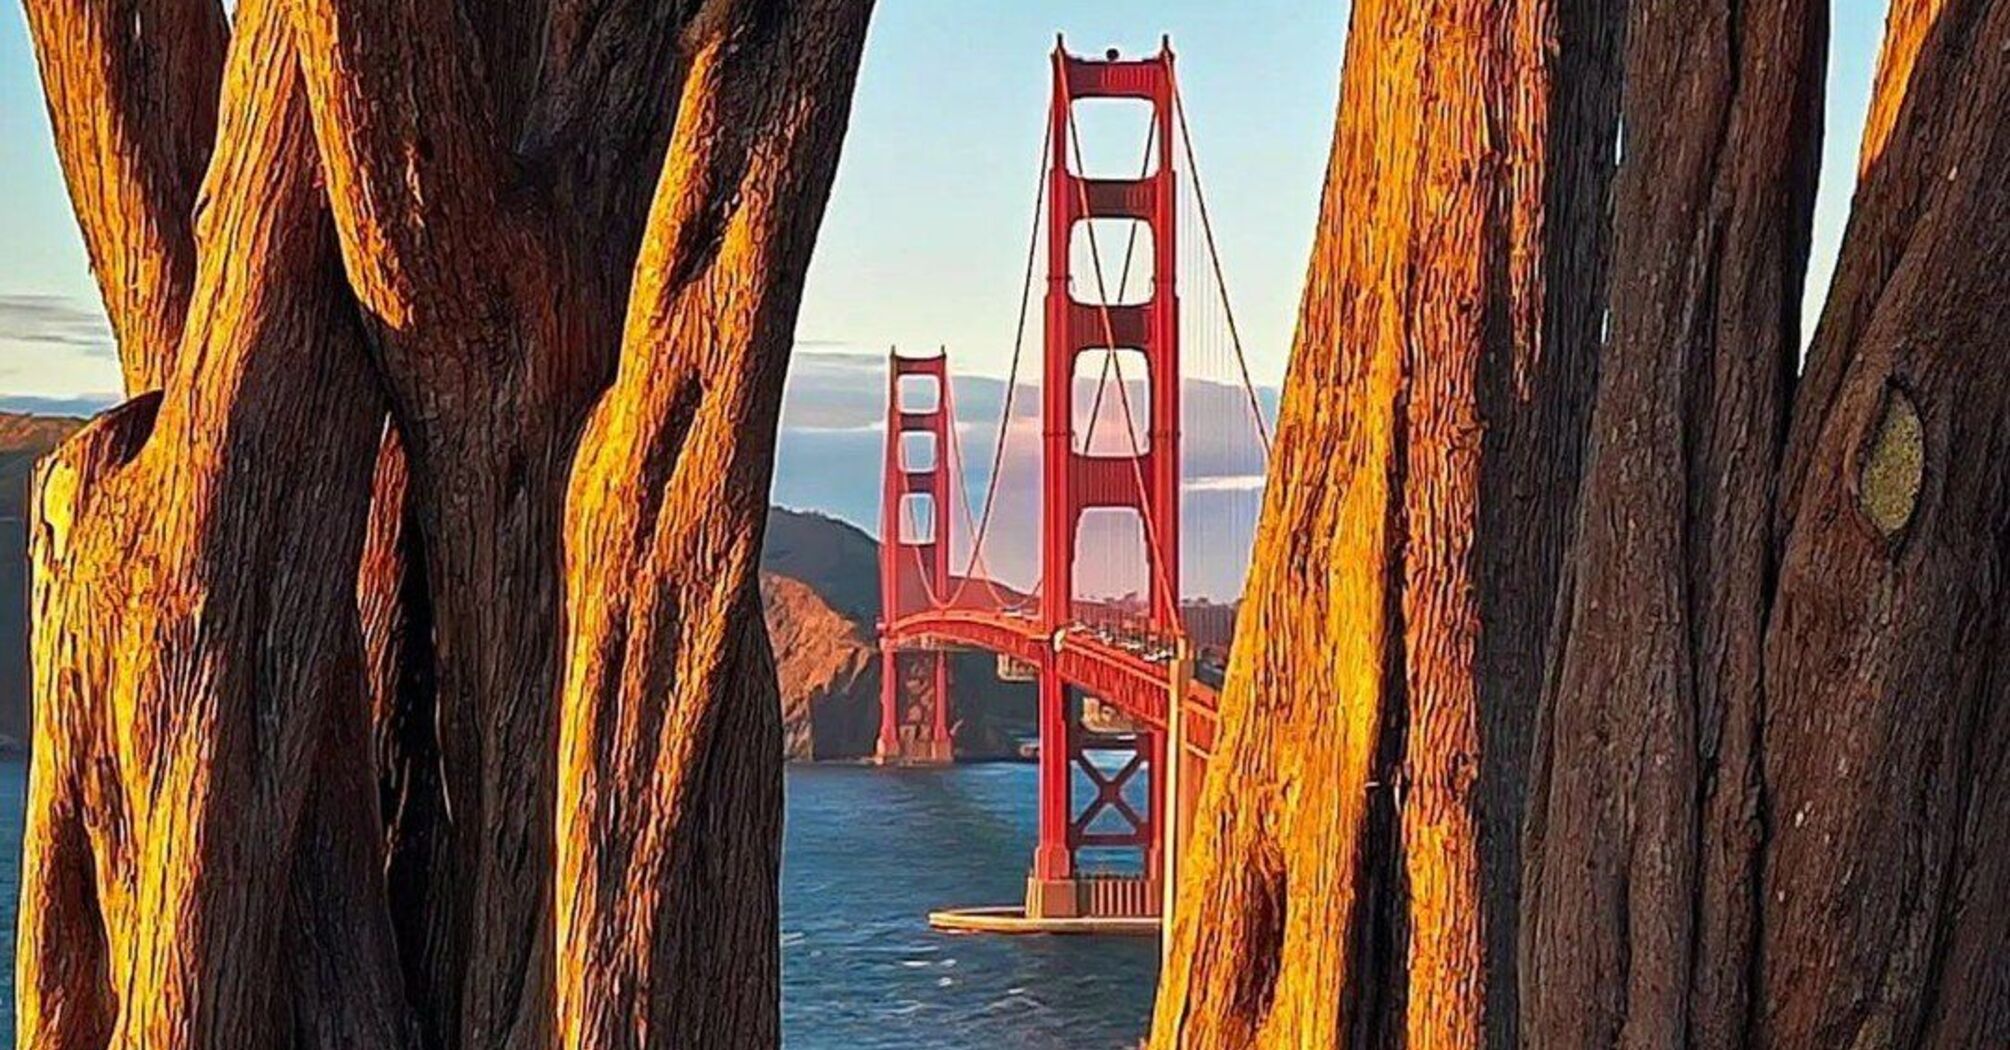 Tolls: what changes await motorists on the Golden Gate Bridge